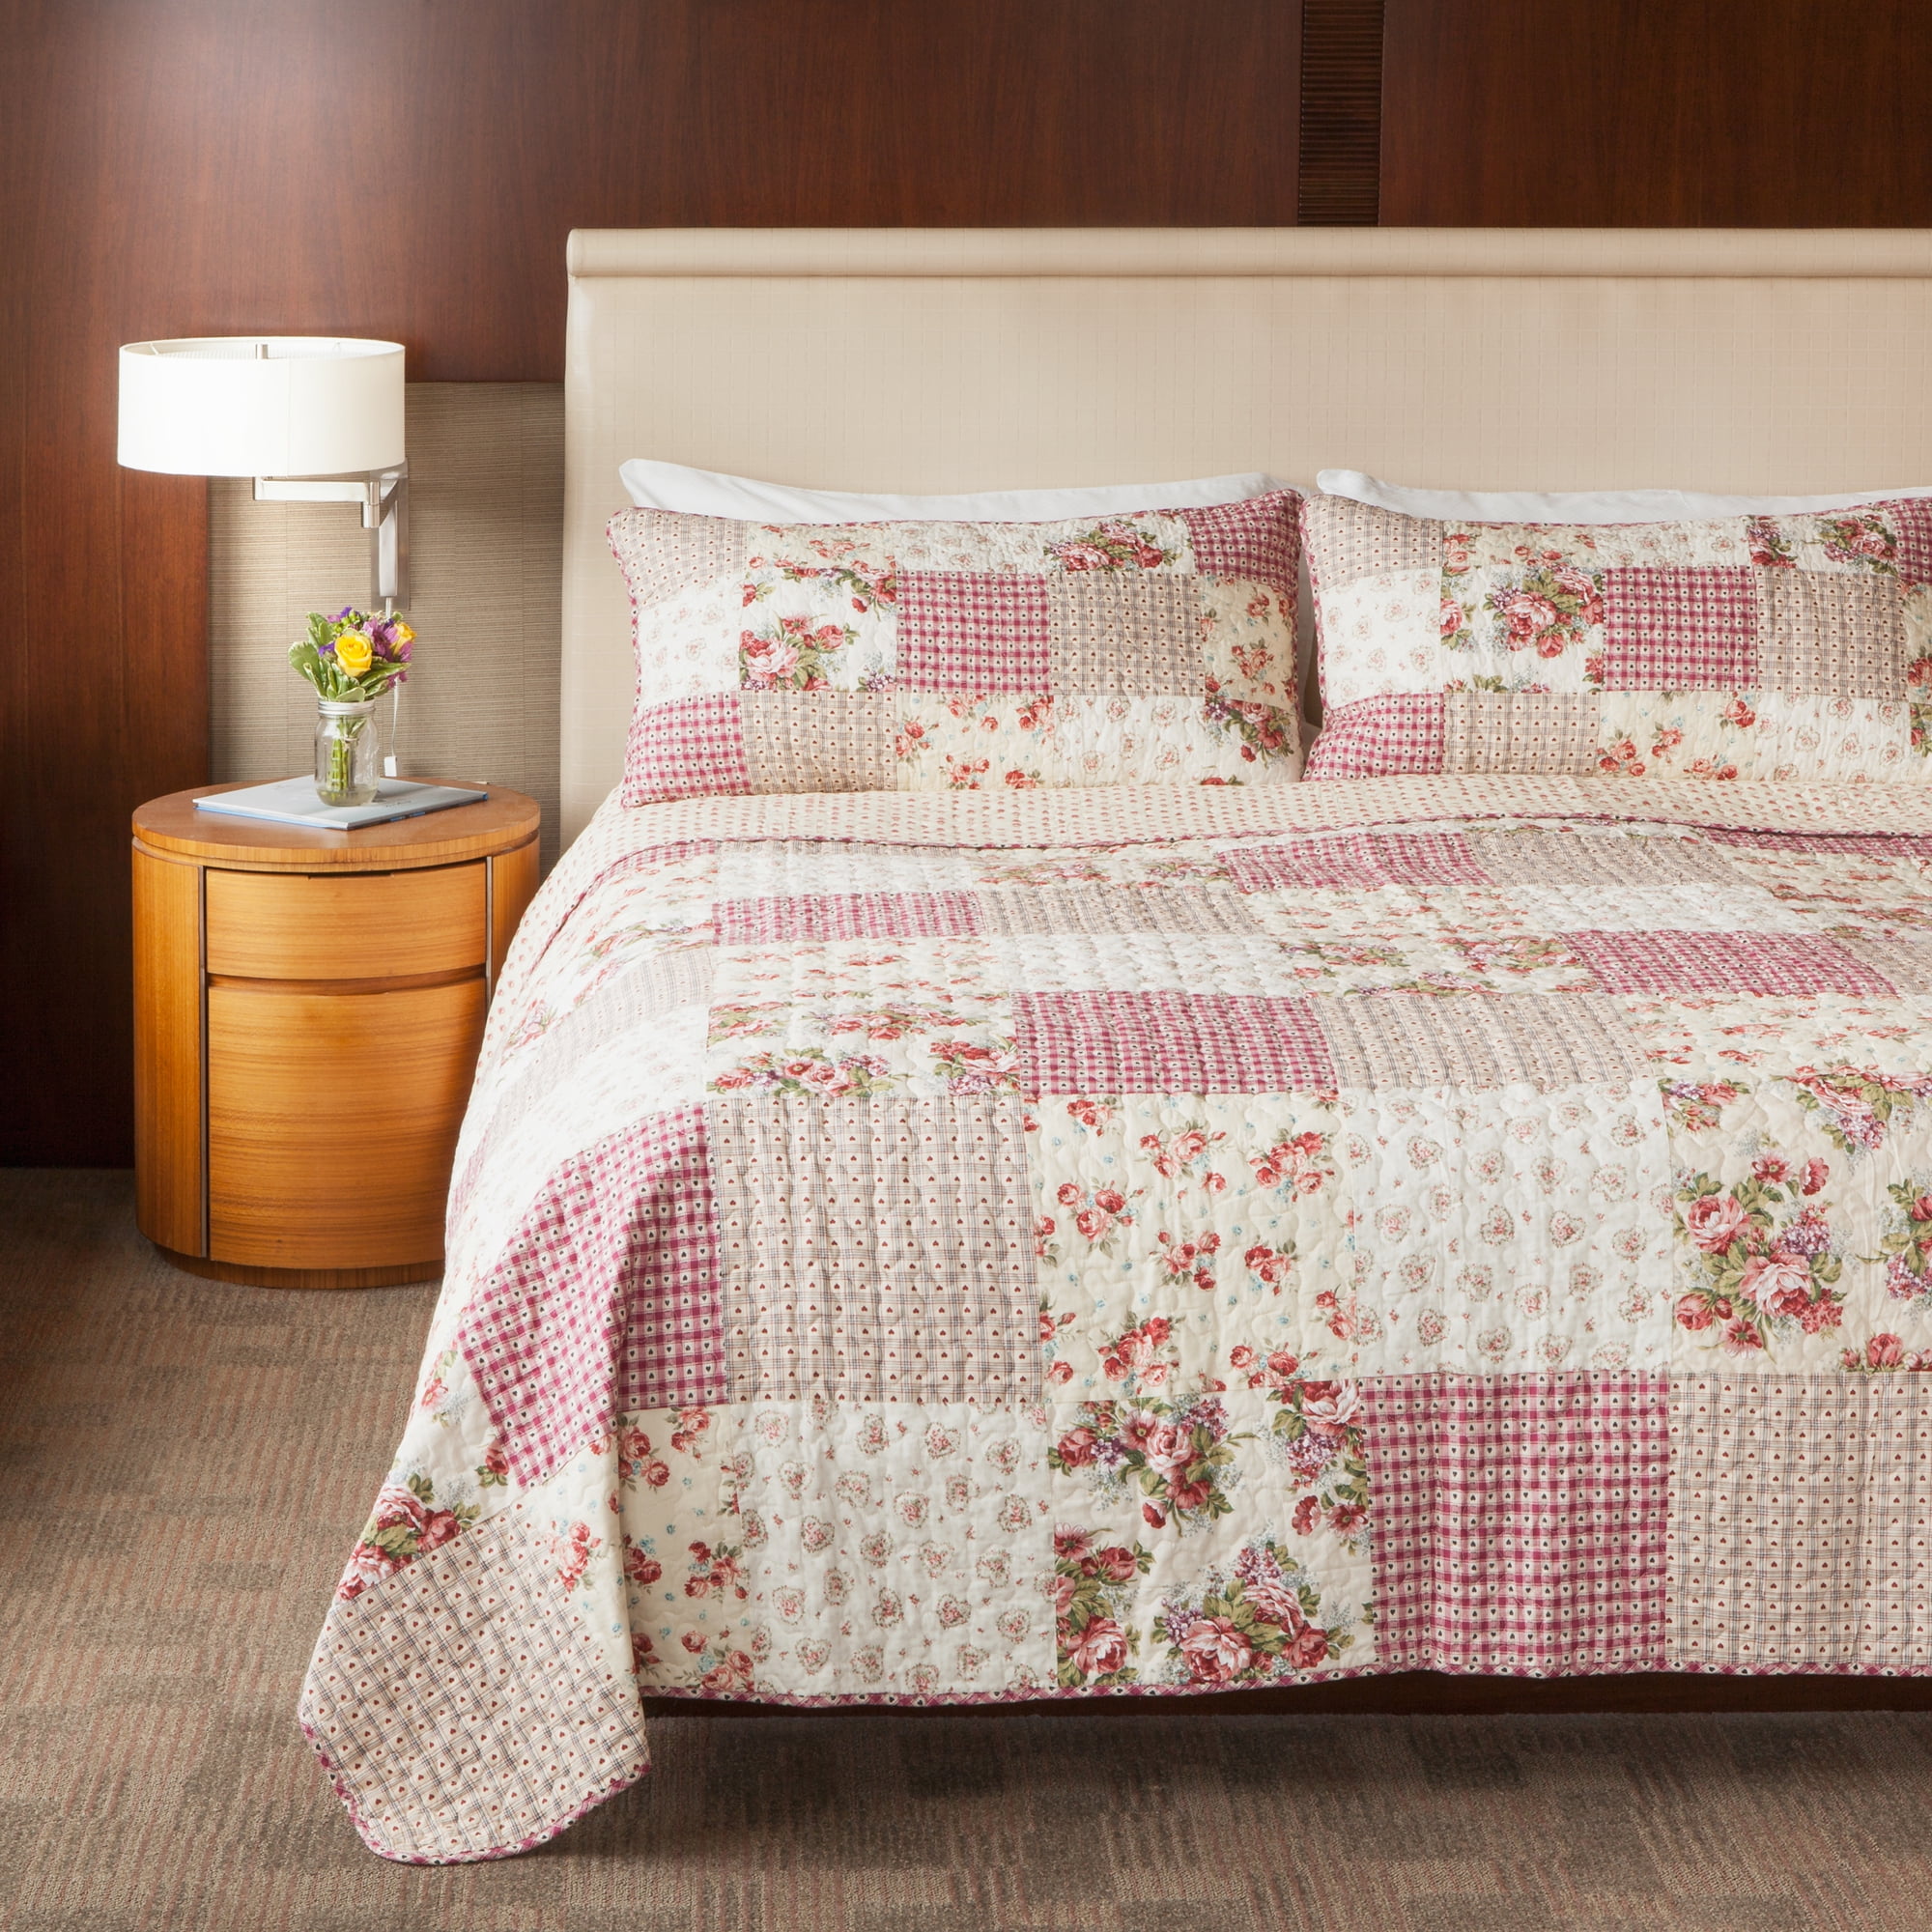 SLPR Country Roses 3-Piece Patchwork Cotton Bedding Quilt Set - Queen